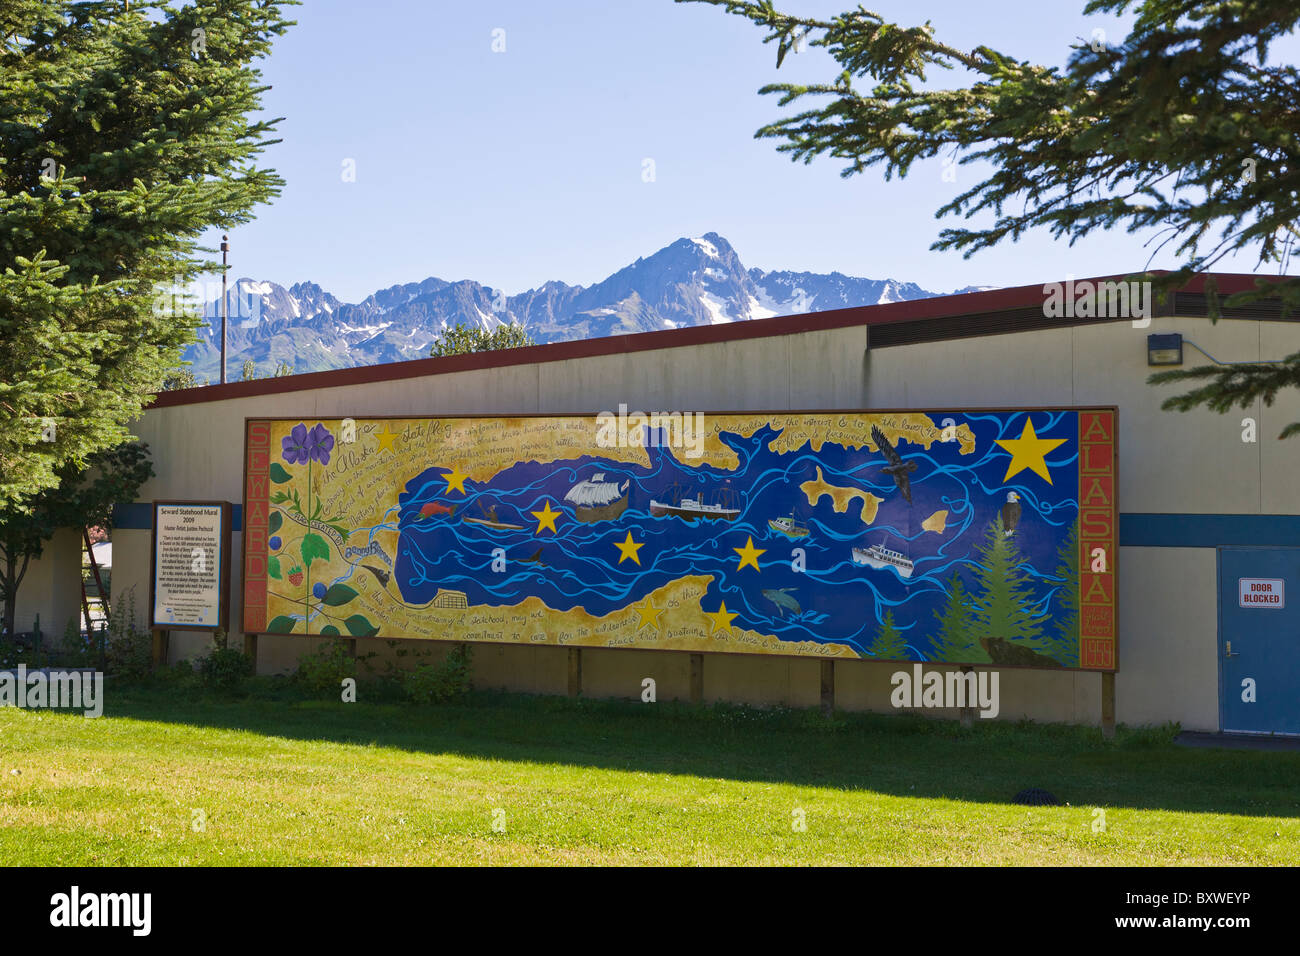 Painted mural on buildings in downtown Seward Alaska on the Kenai peninsula of Alaska Stock Photo